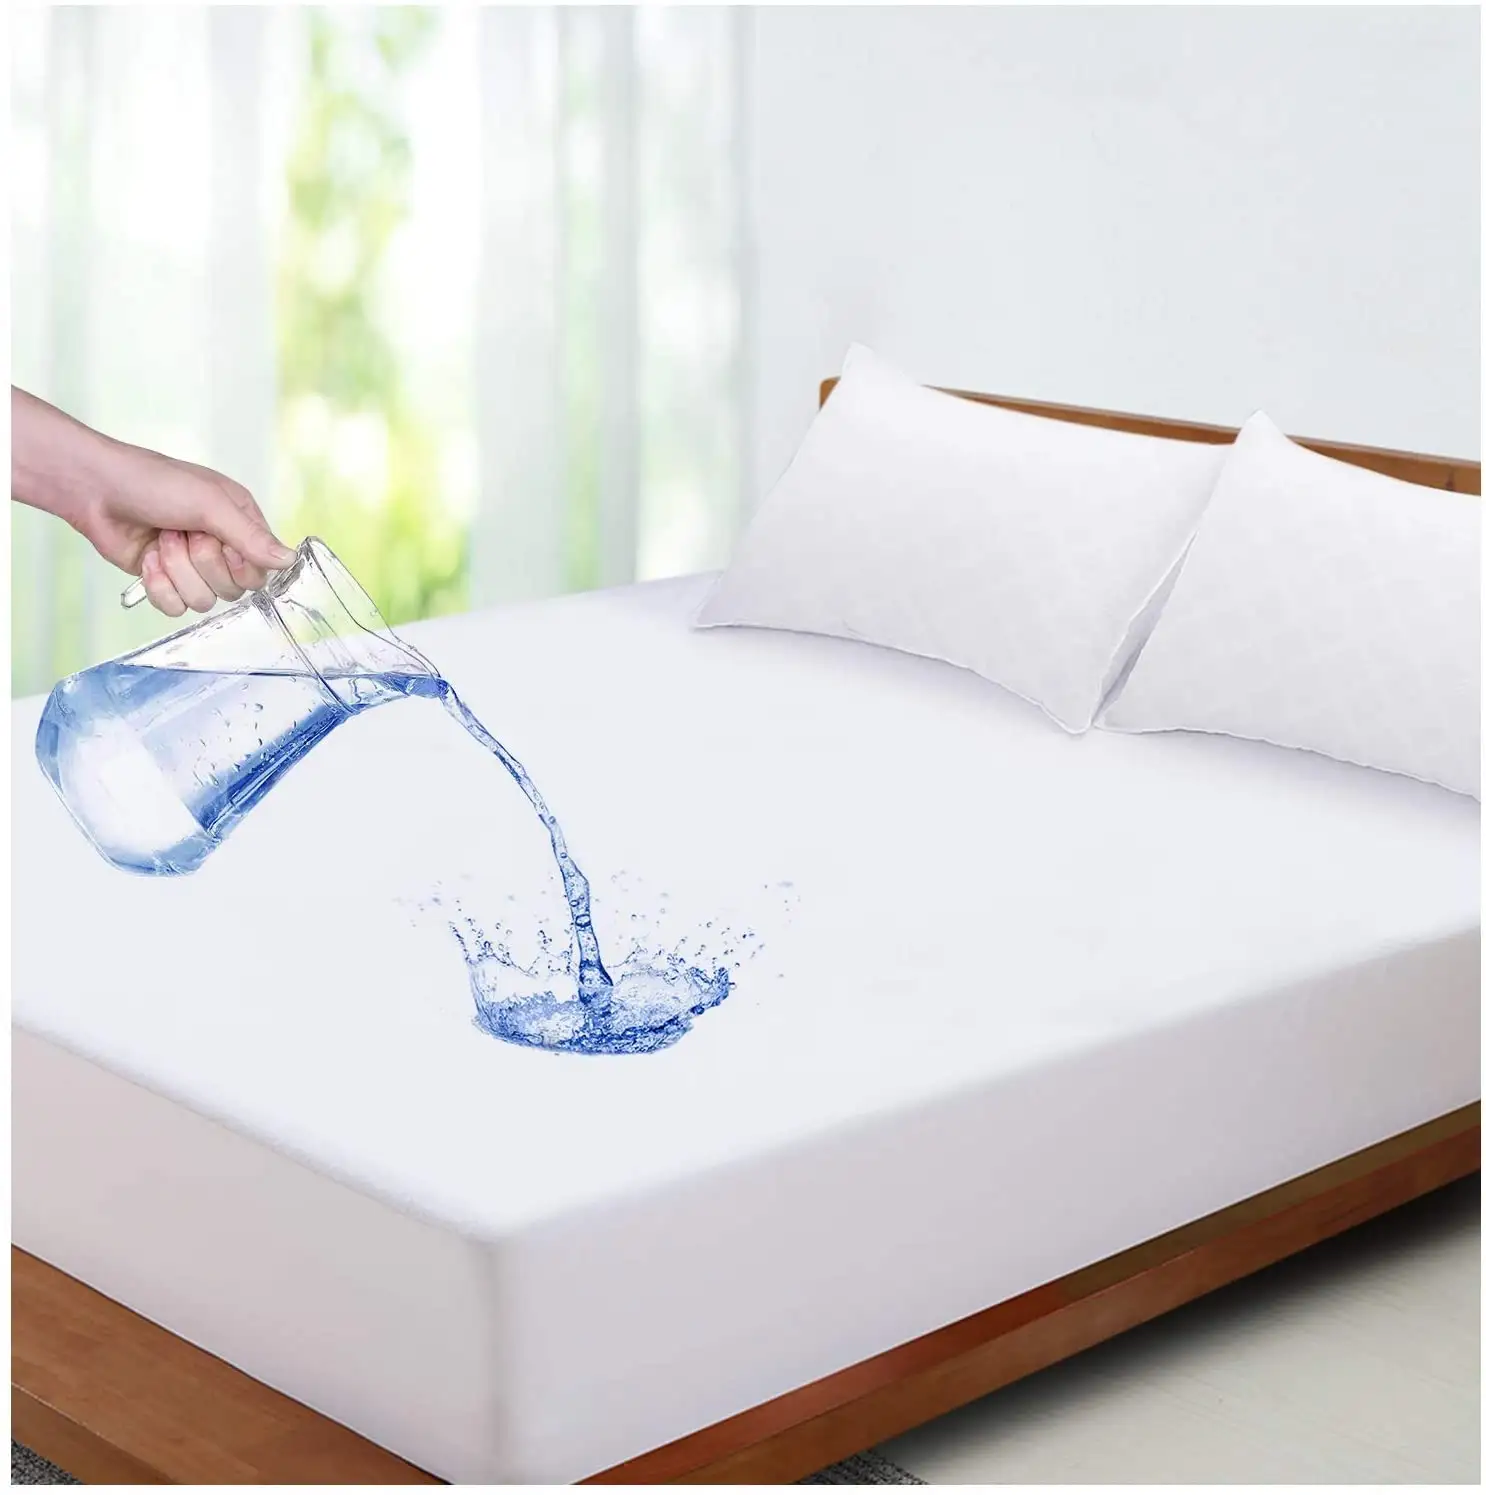 Hotel Goedkope Matrashoes Bed Bug Waterdichte Matrasbeschermer